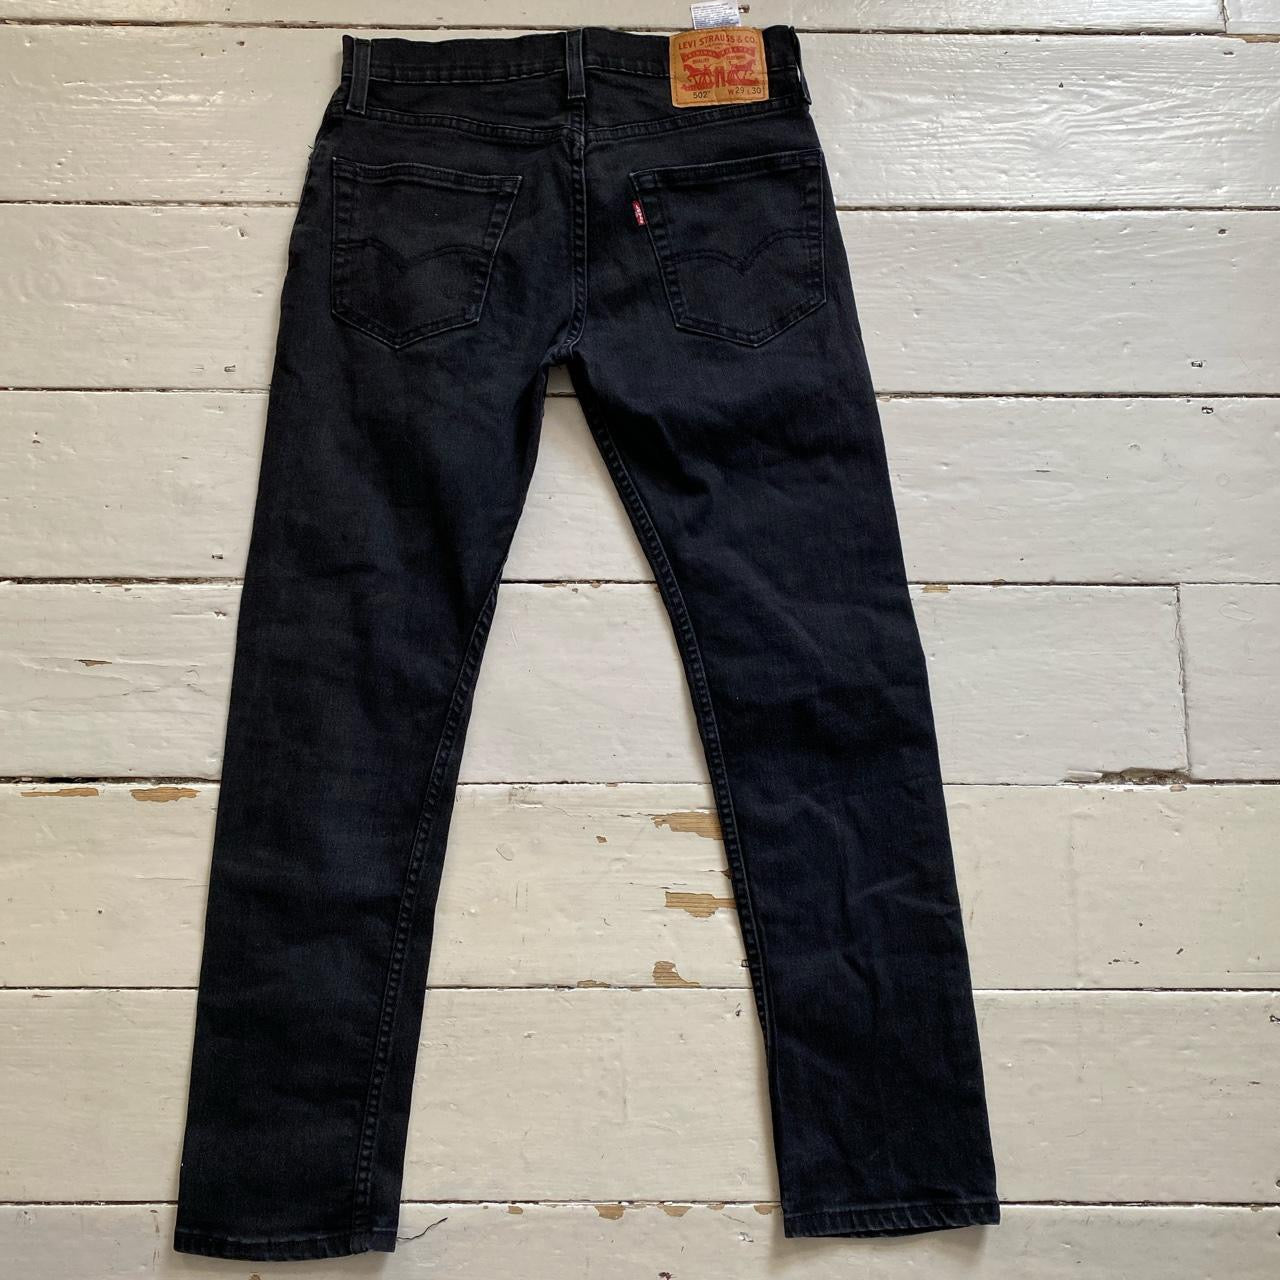 Levis 502 Slim Black Jeans (29/28)